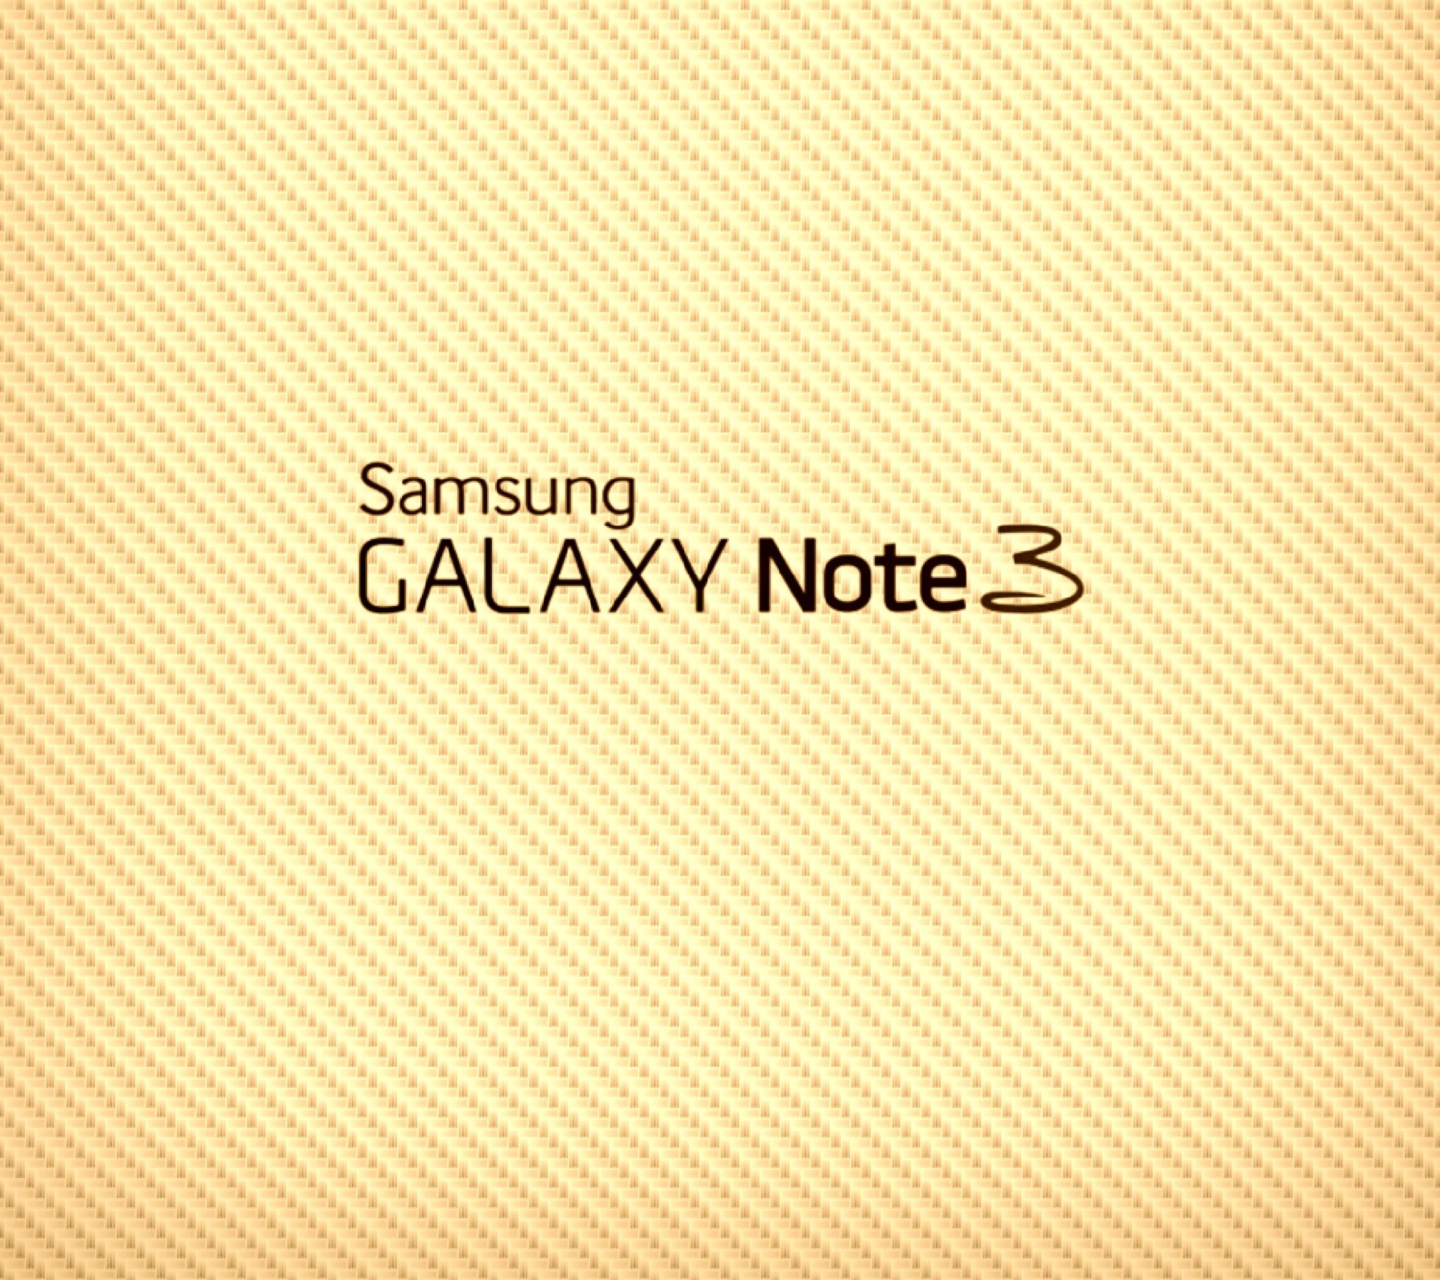 Sfondi Samsung Galaxy Note 3 Gold 1440x1280